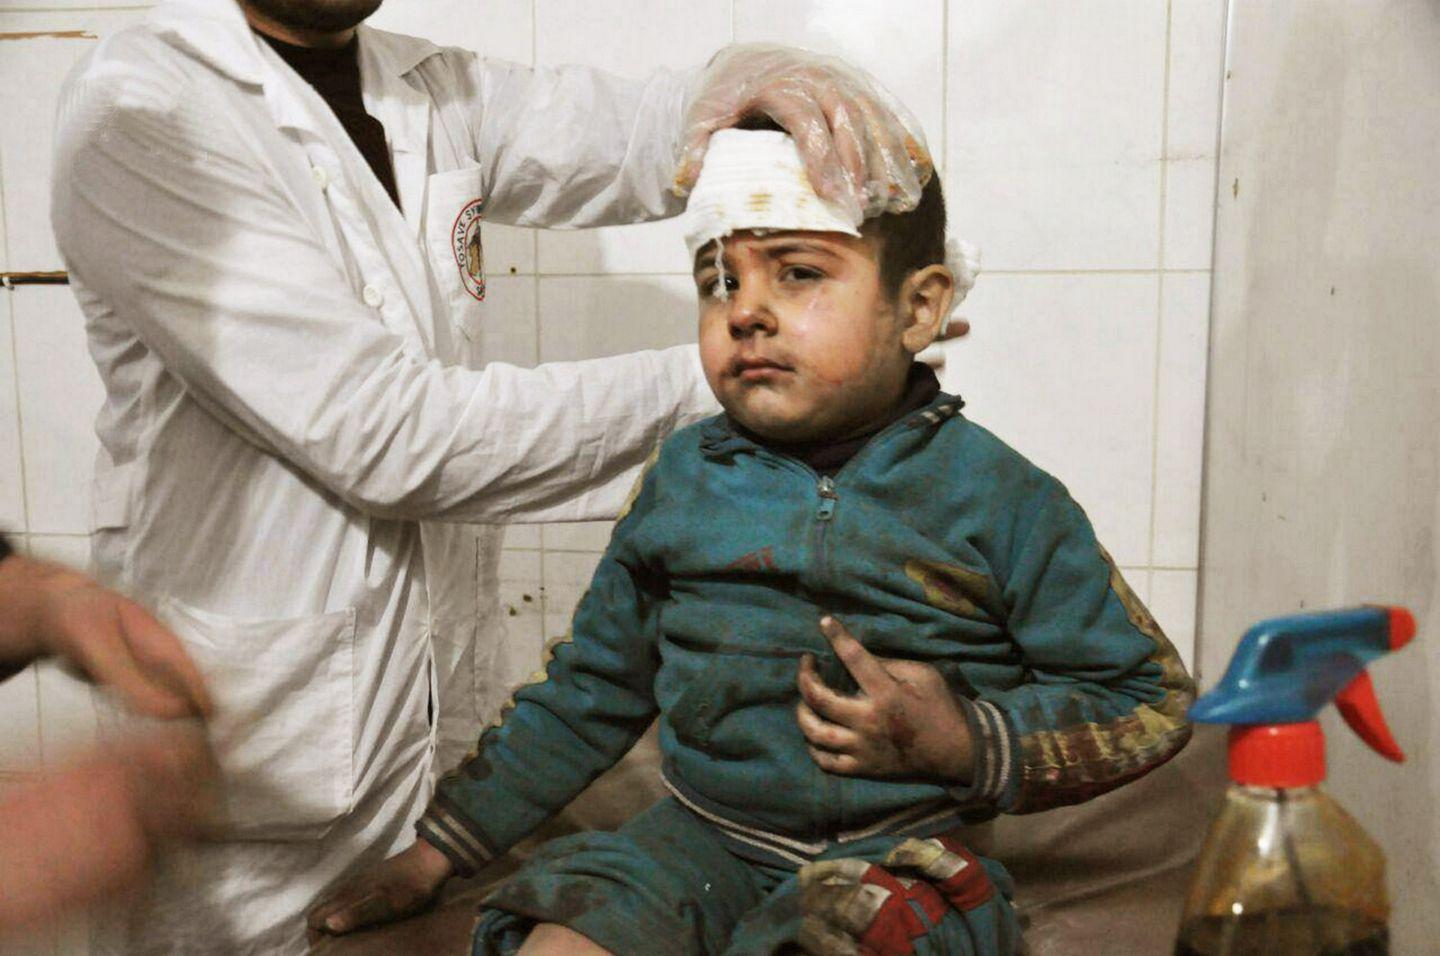 Syria civil war: Images of horror